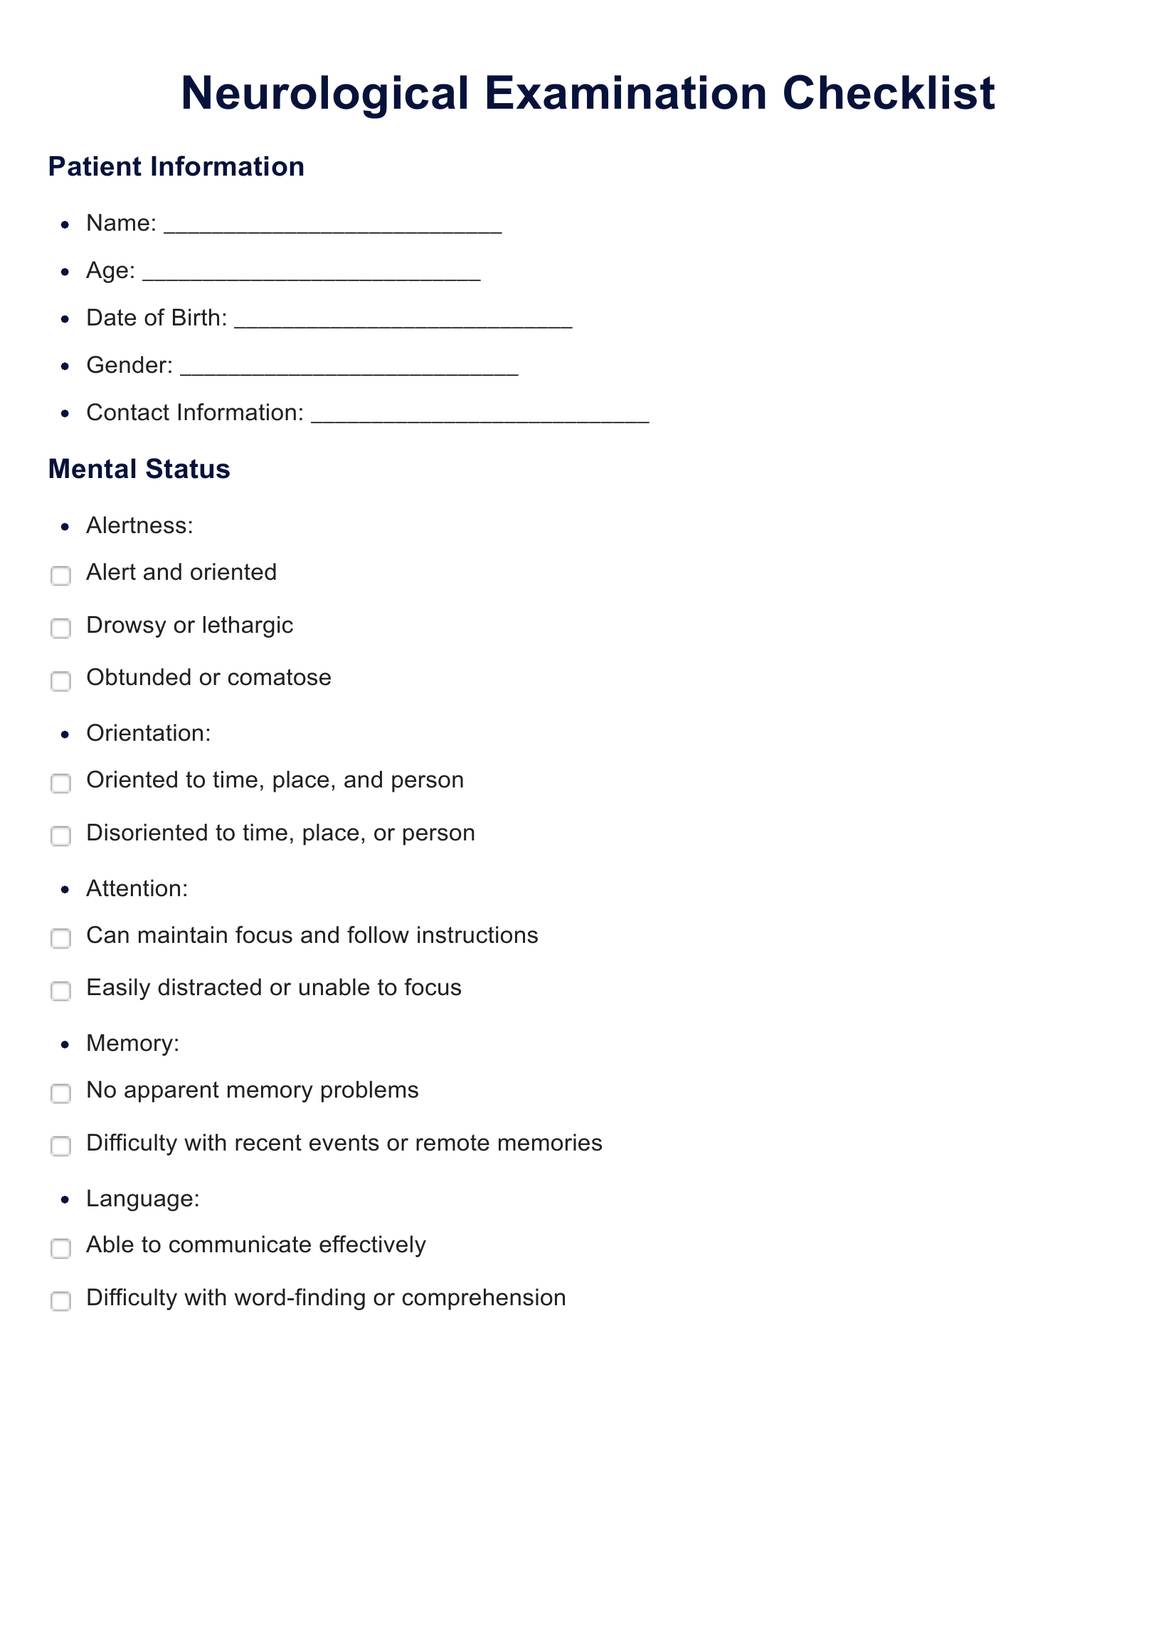 Neurological Examination Checklist PDF Example